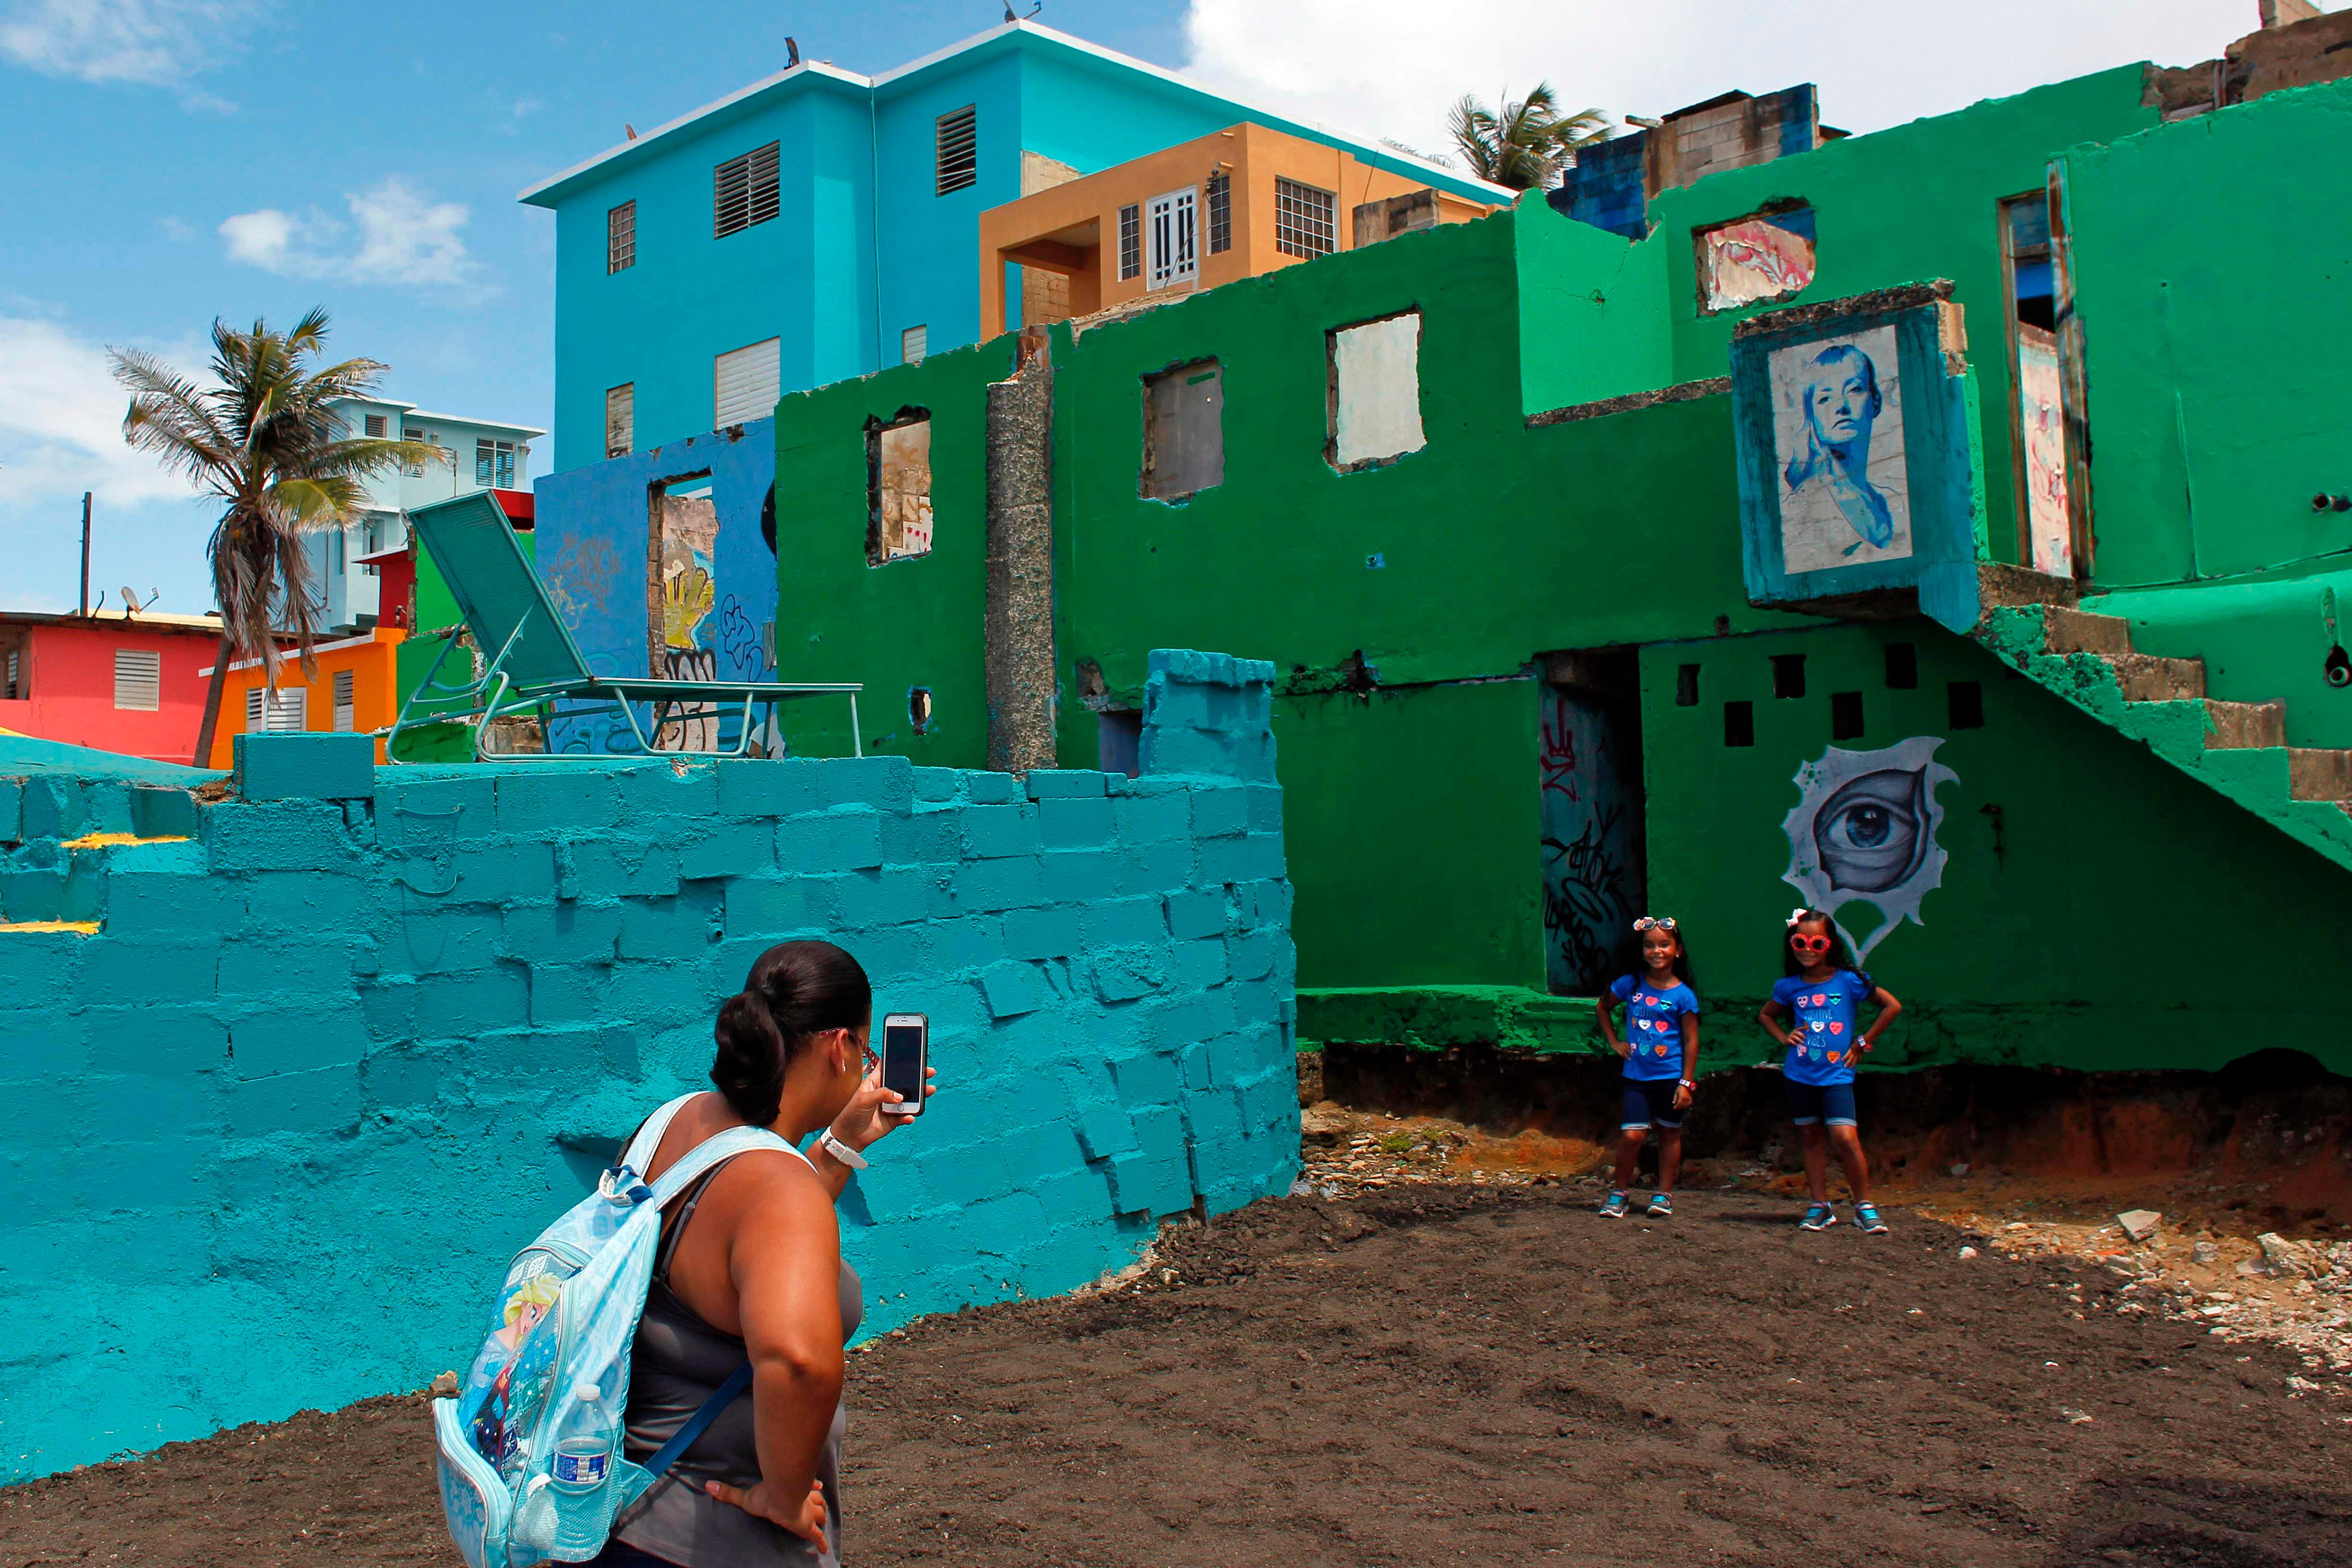 🇵🇷 La Perla; Old San Juan neighborhood made famous by Despacito